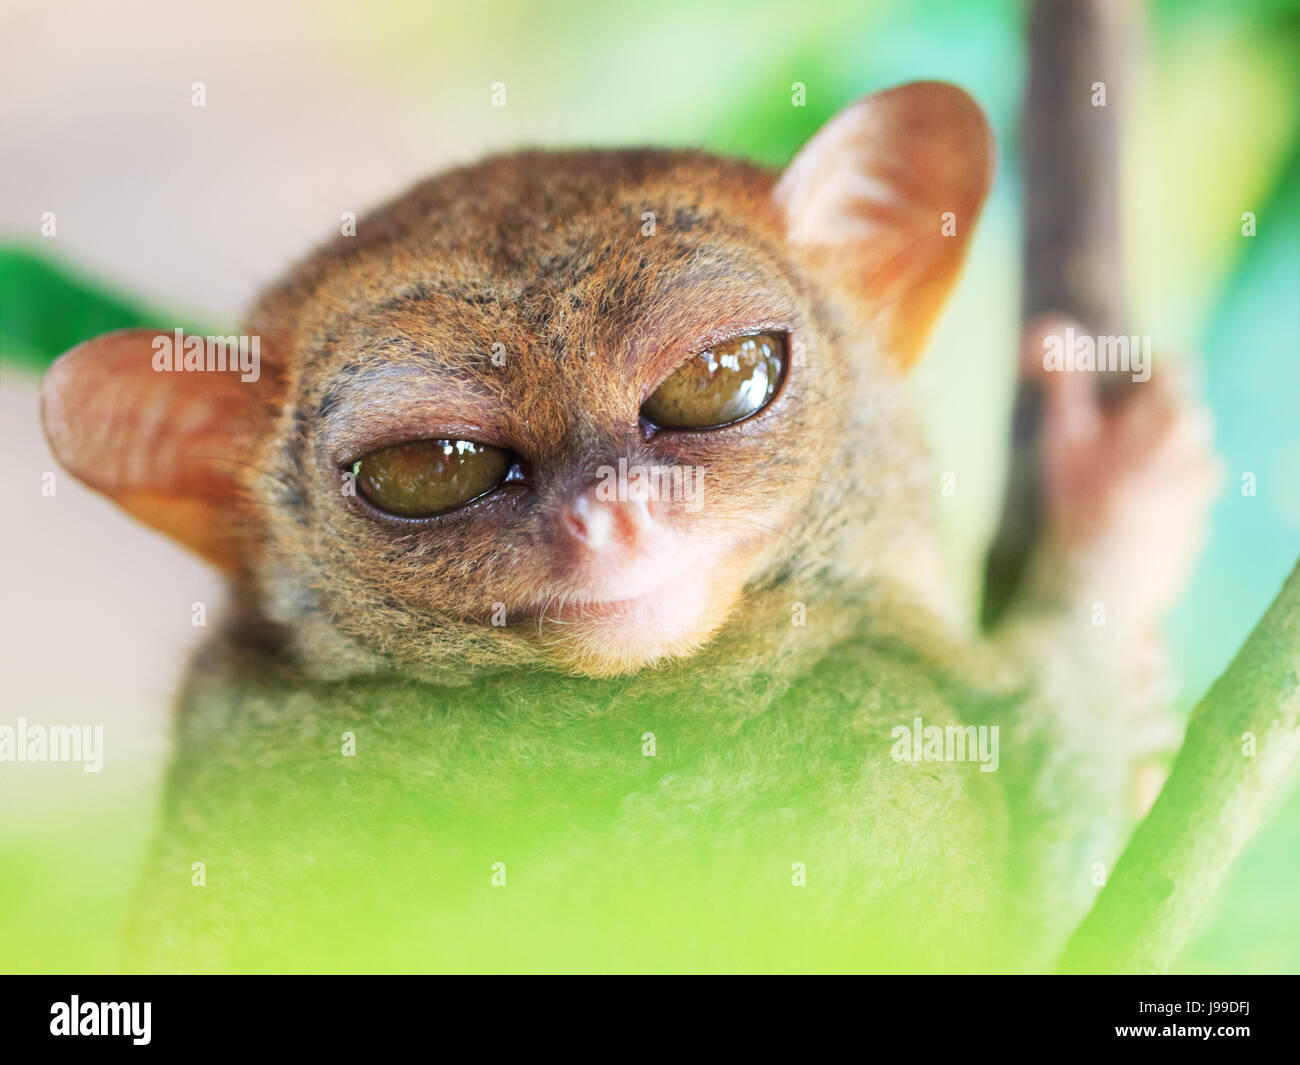 Big eyed monkey hi-res stock photography and images - Alamy